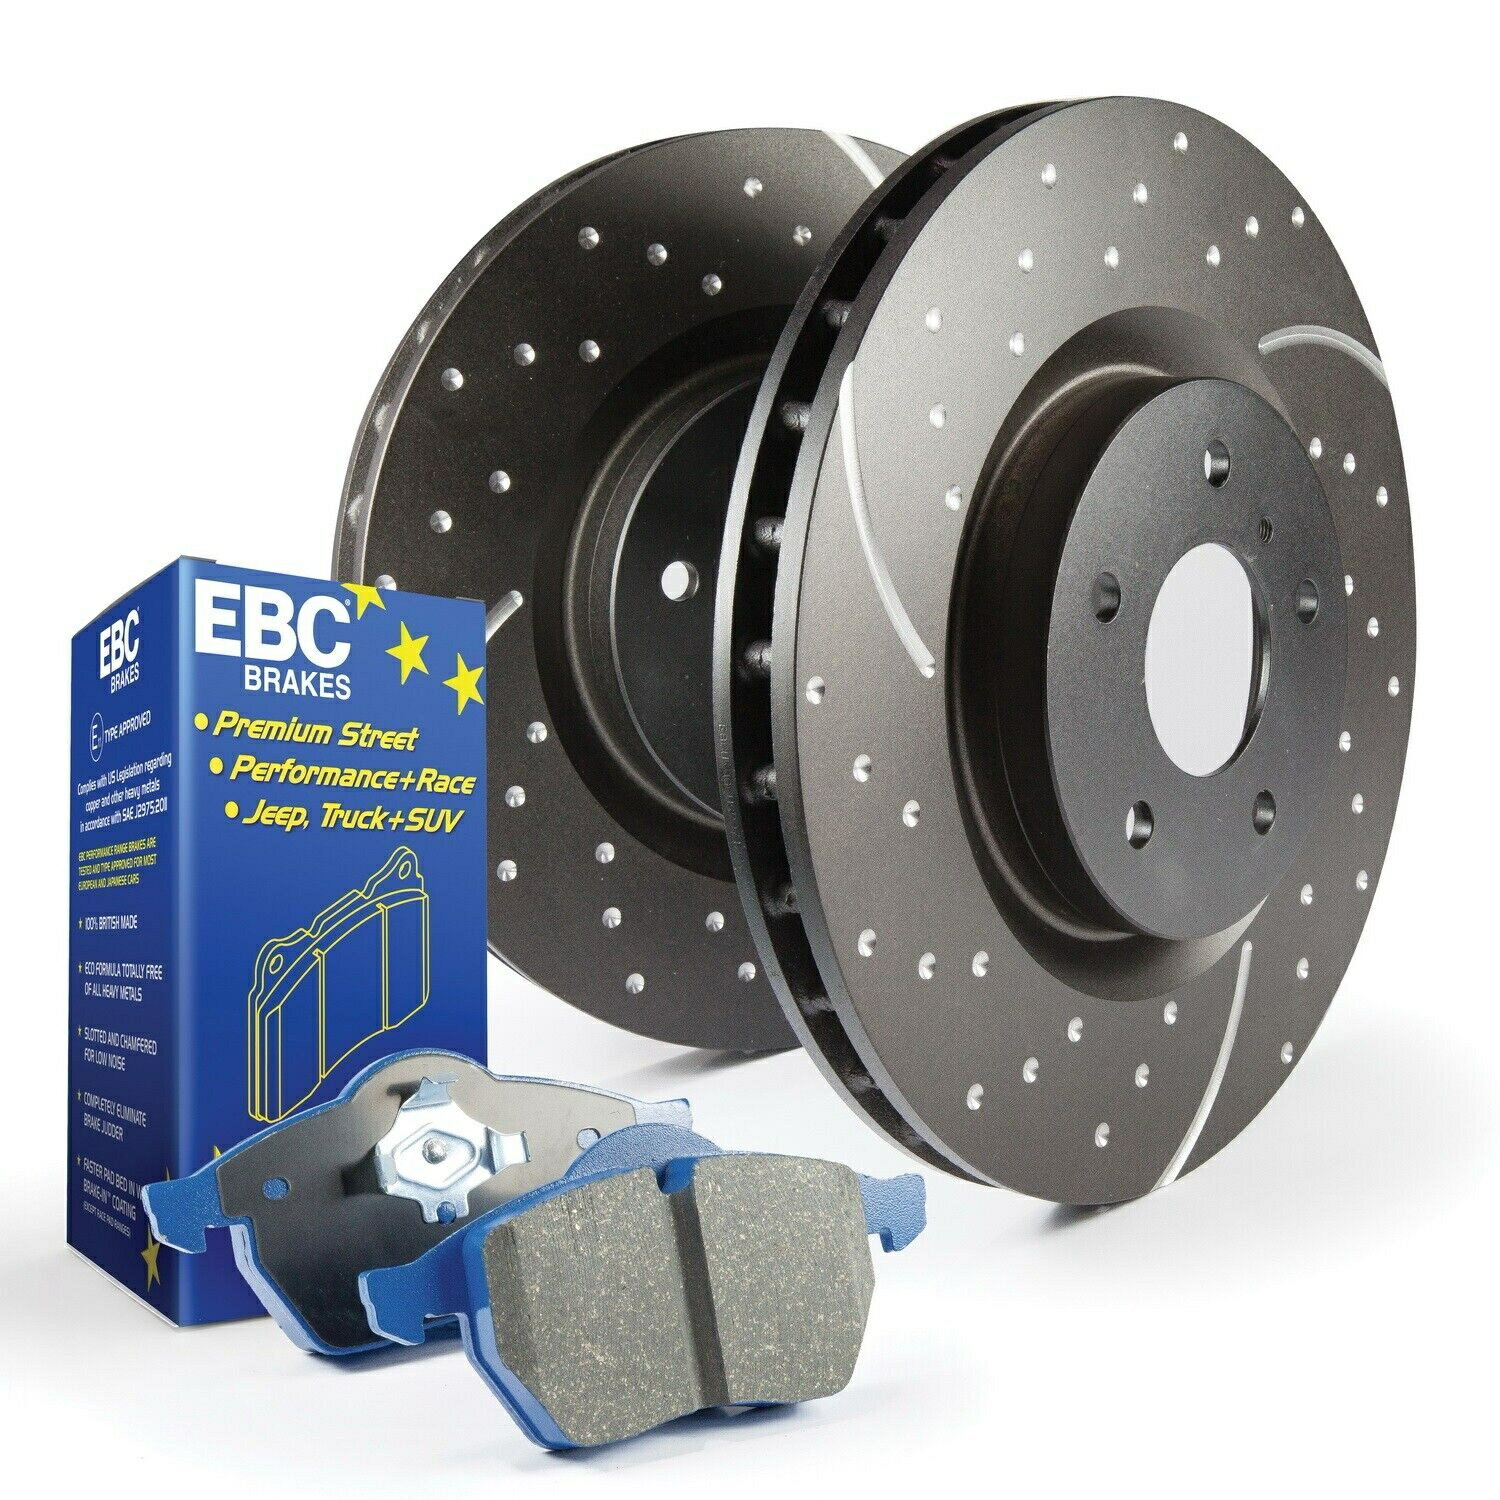 brake disc rotor EBCブレーキS6KF1121 S6キットブルーストフとGDローターは00-02 SECOIA TUNDRAに適合します EBC Brakes S6KF1121 S6 Kits Bluestuff and GD Rotors Fits 00-02 Sequoia Tundra